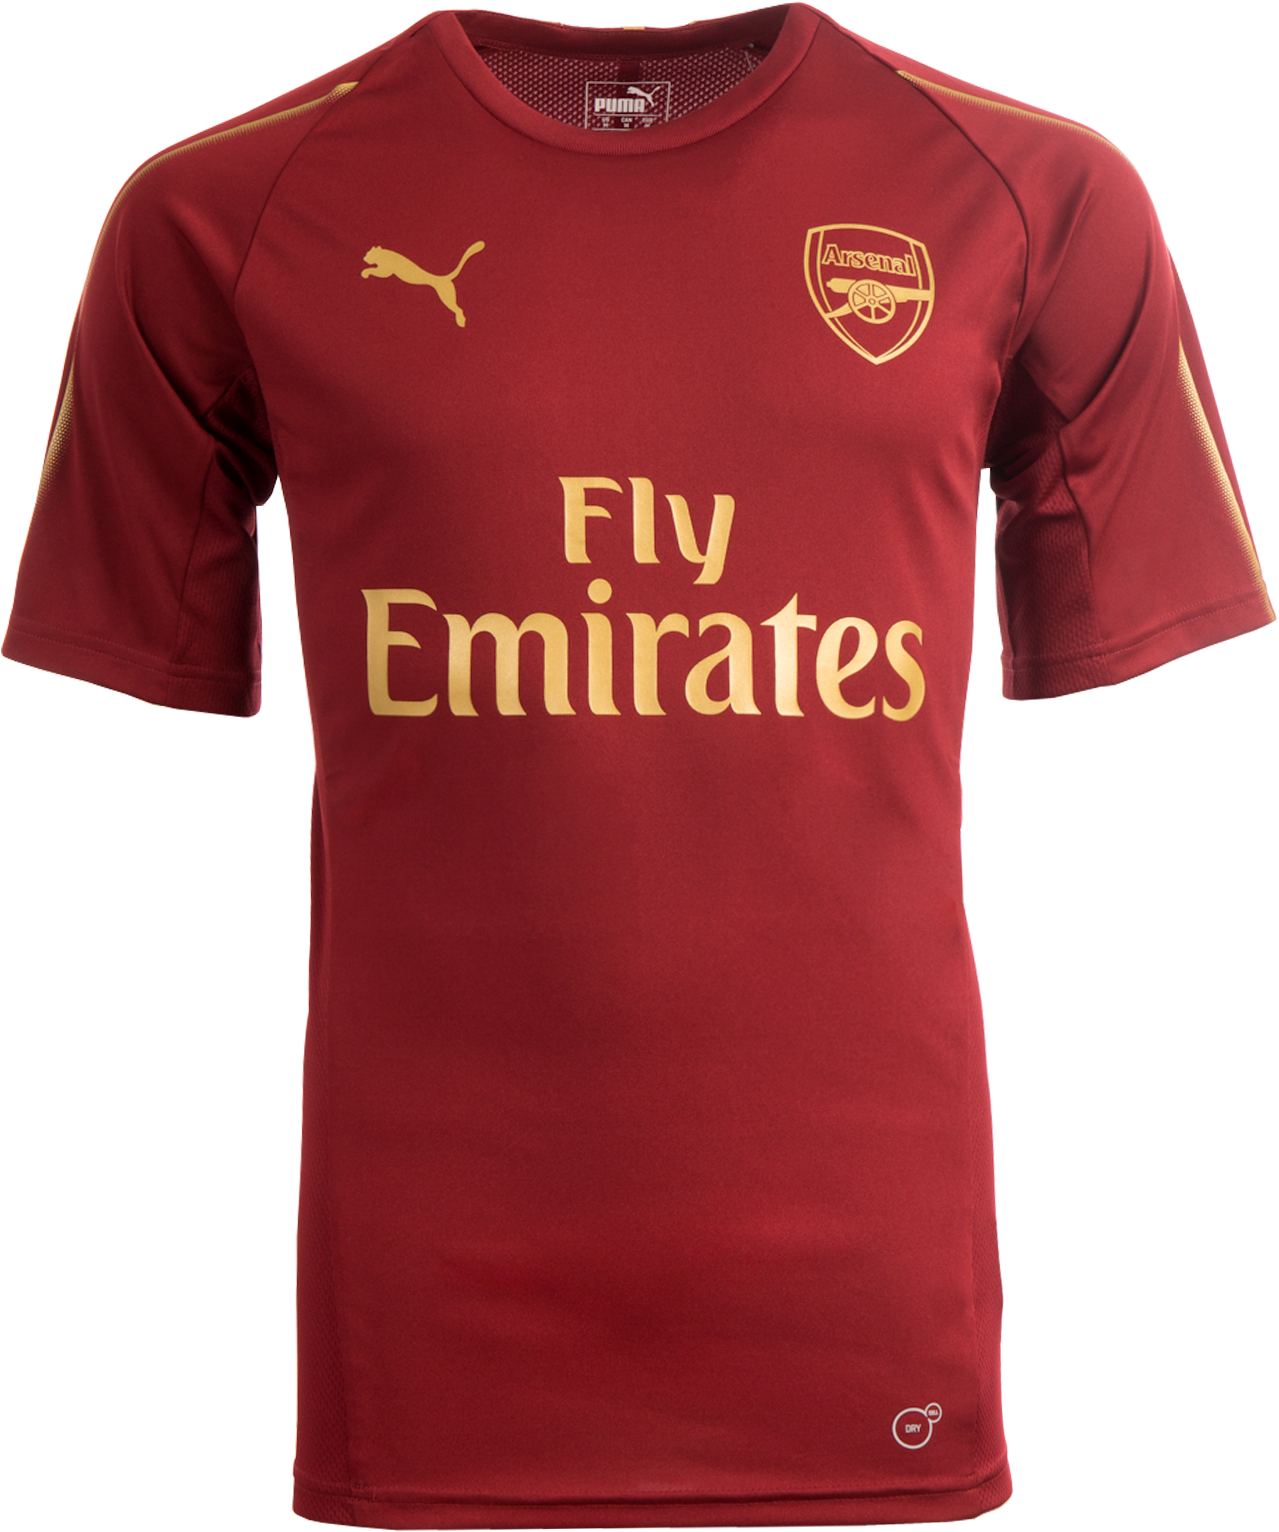 Arsenal Fly Emirates Jersey